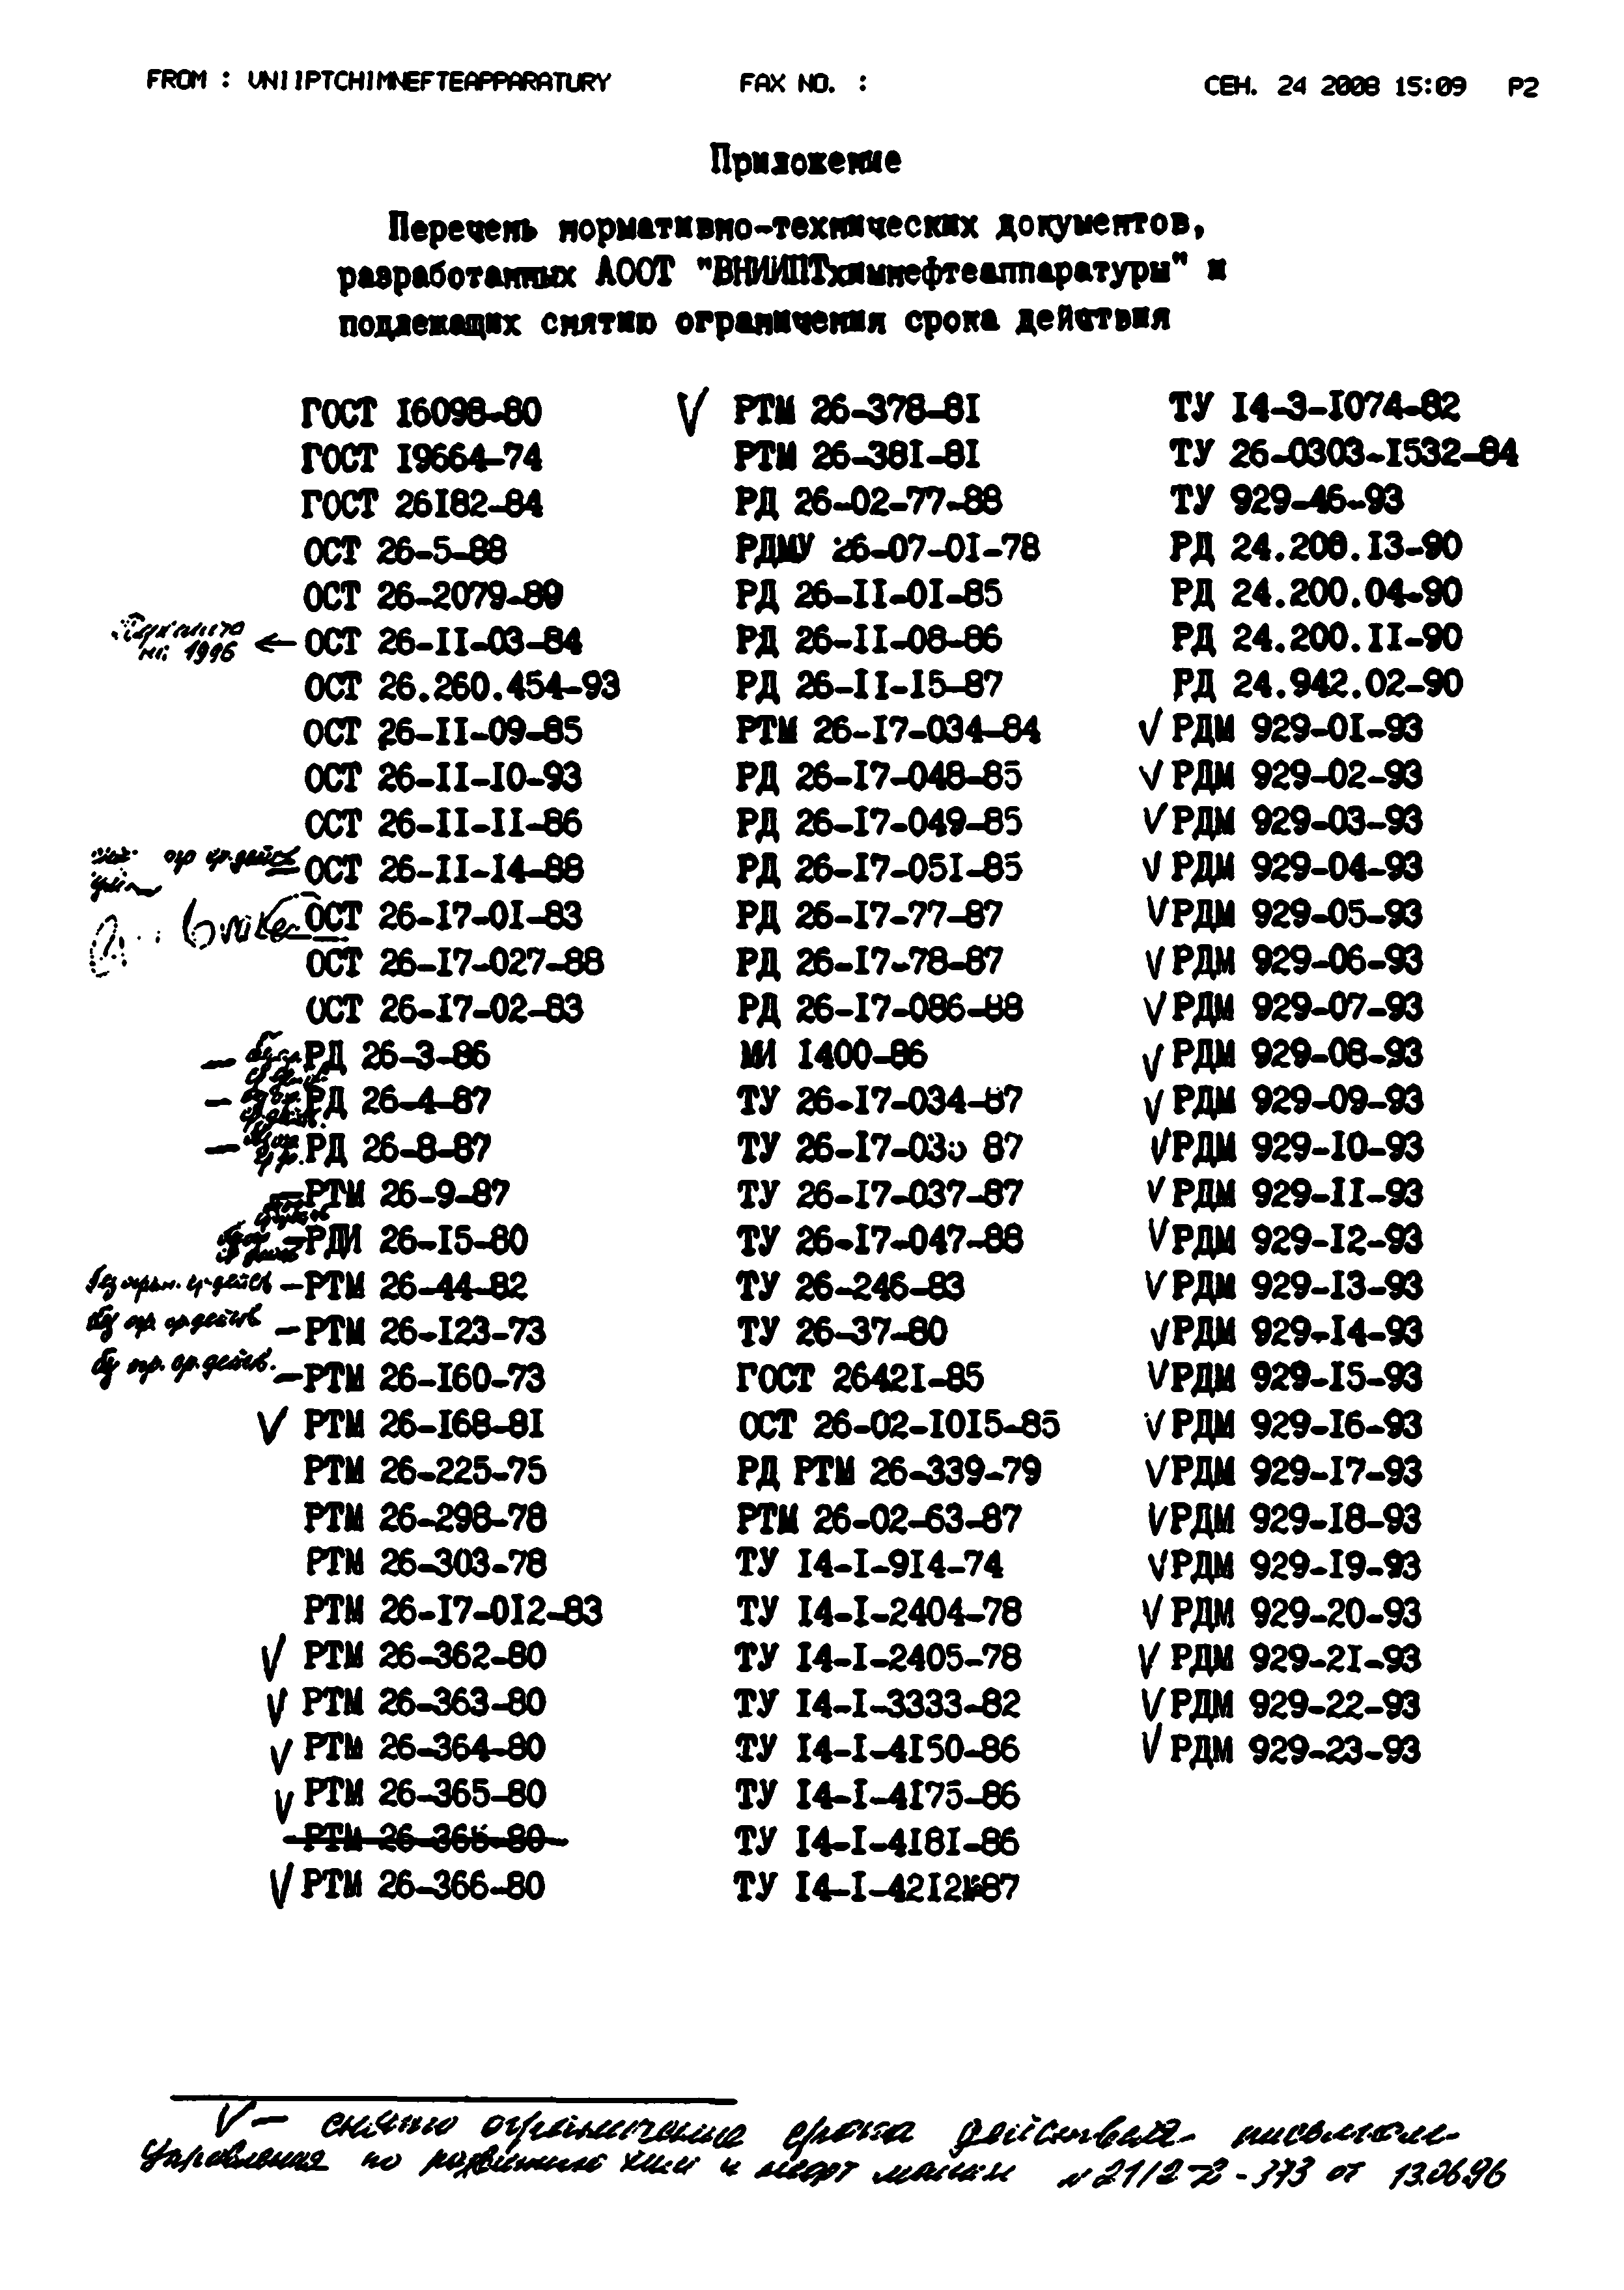 РДМ 929-18-93